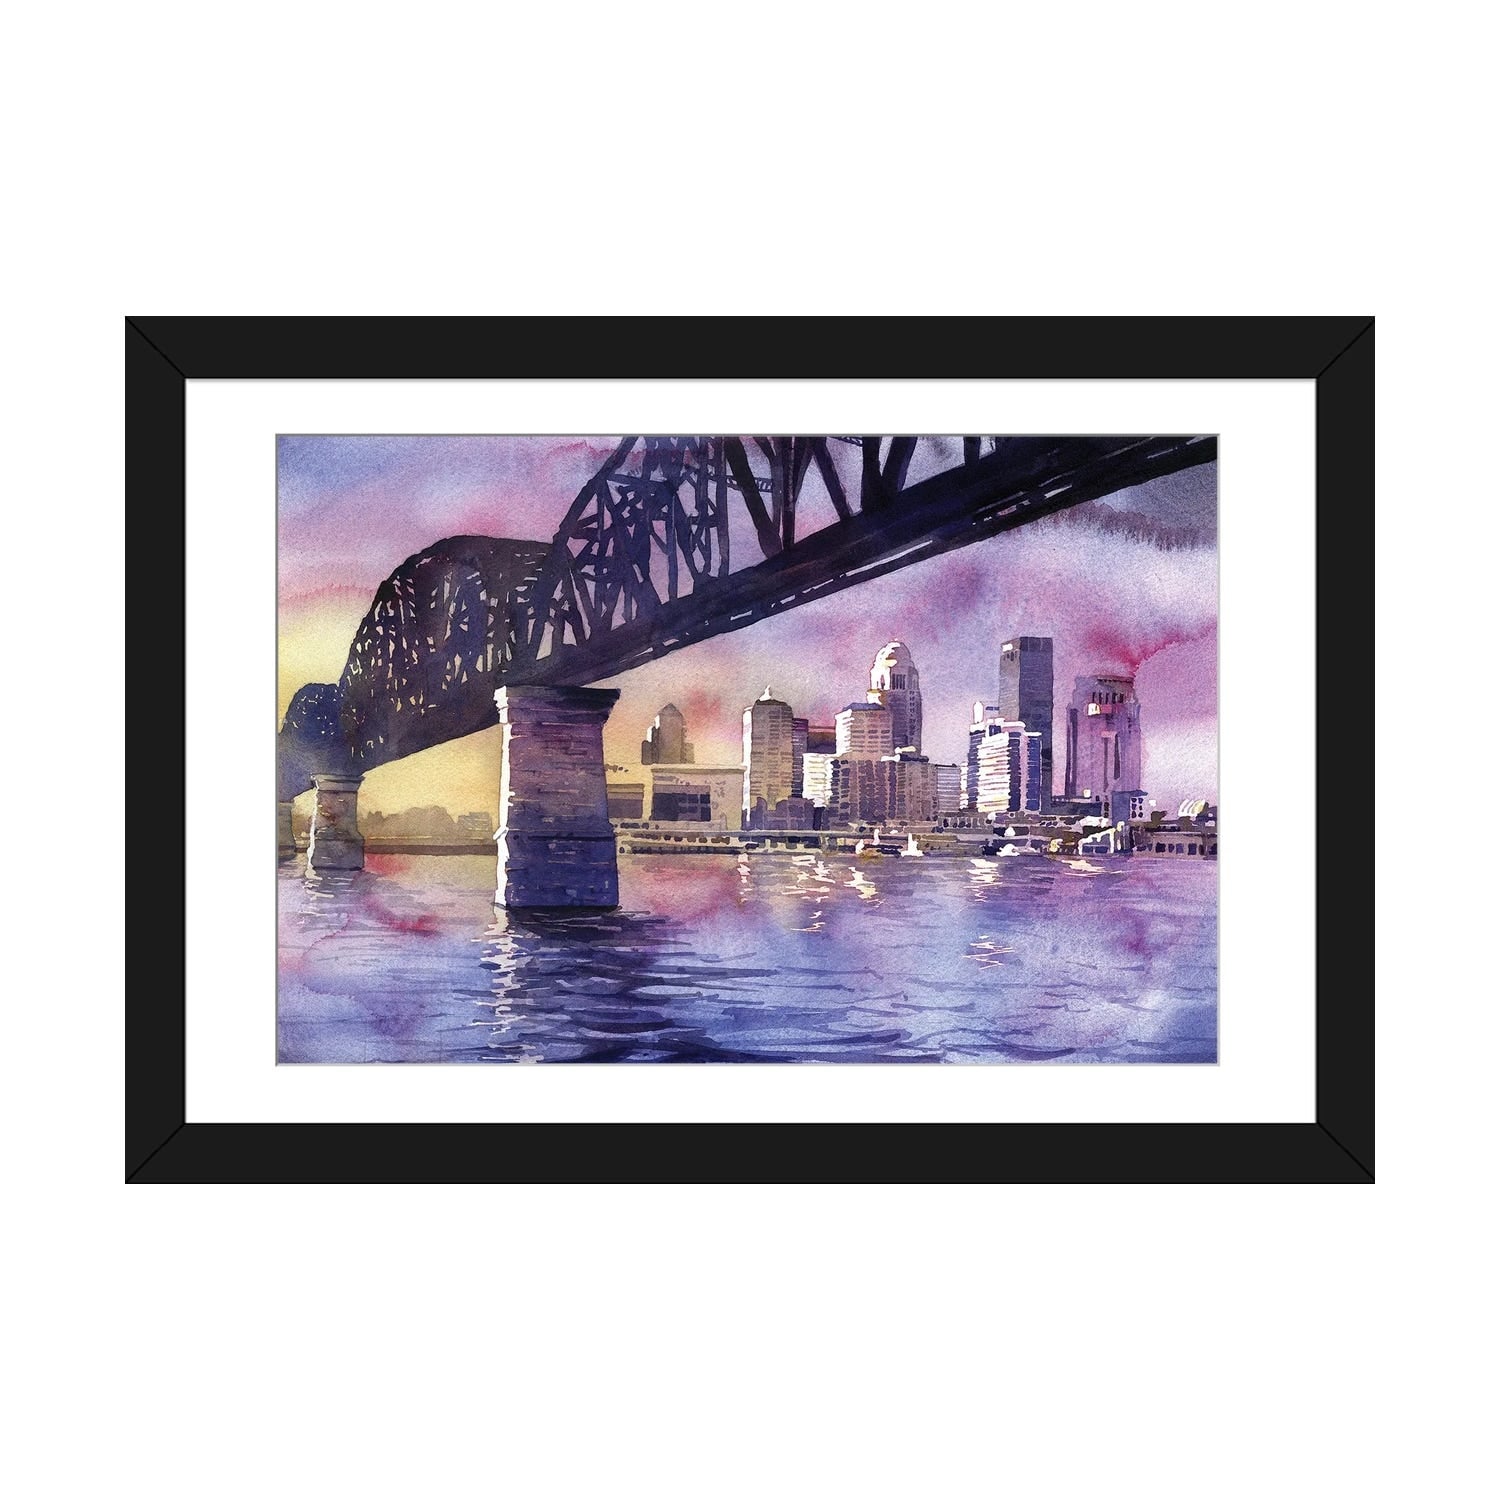 Louisville, Kentucky, Retro Skyline Classic Series, Art & Giclee Prints